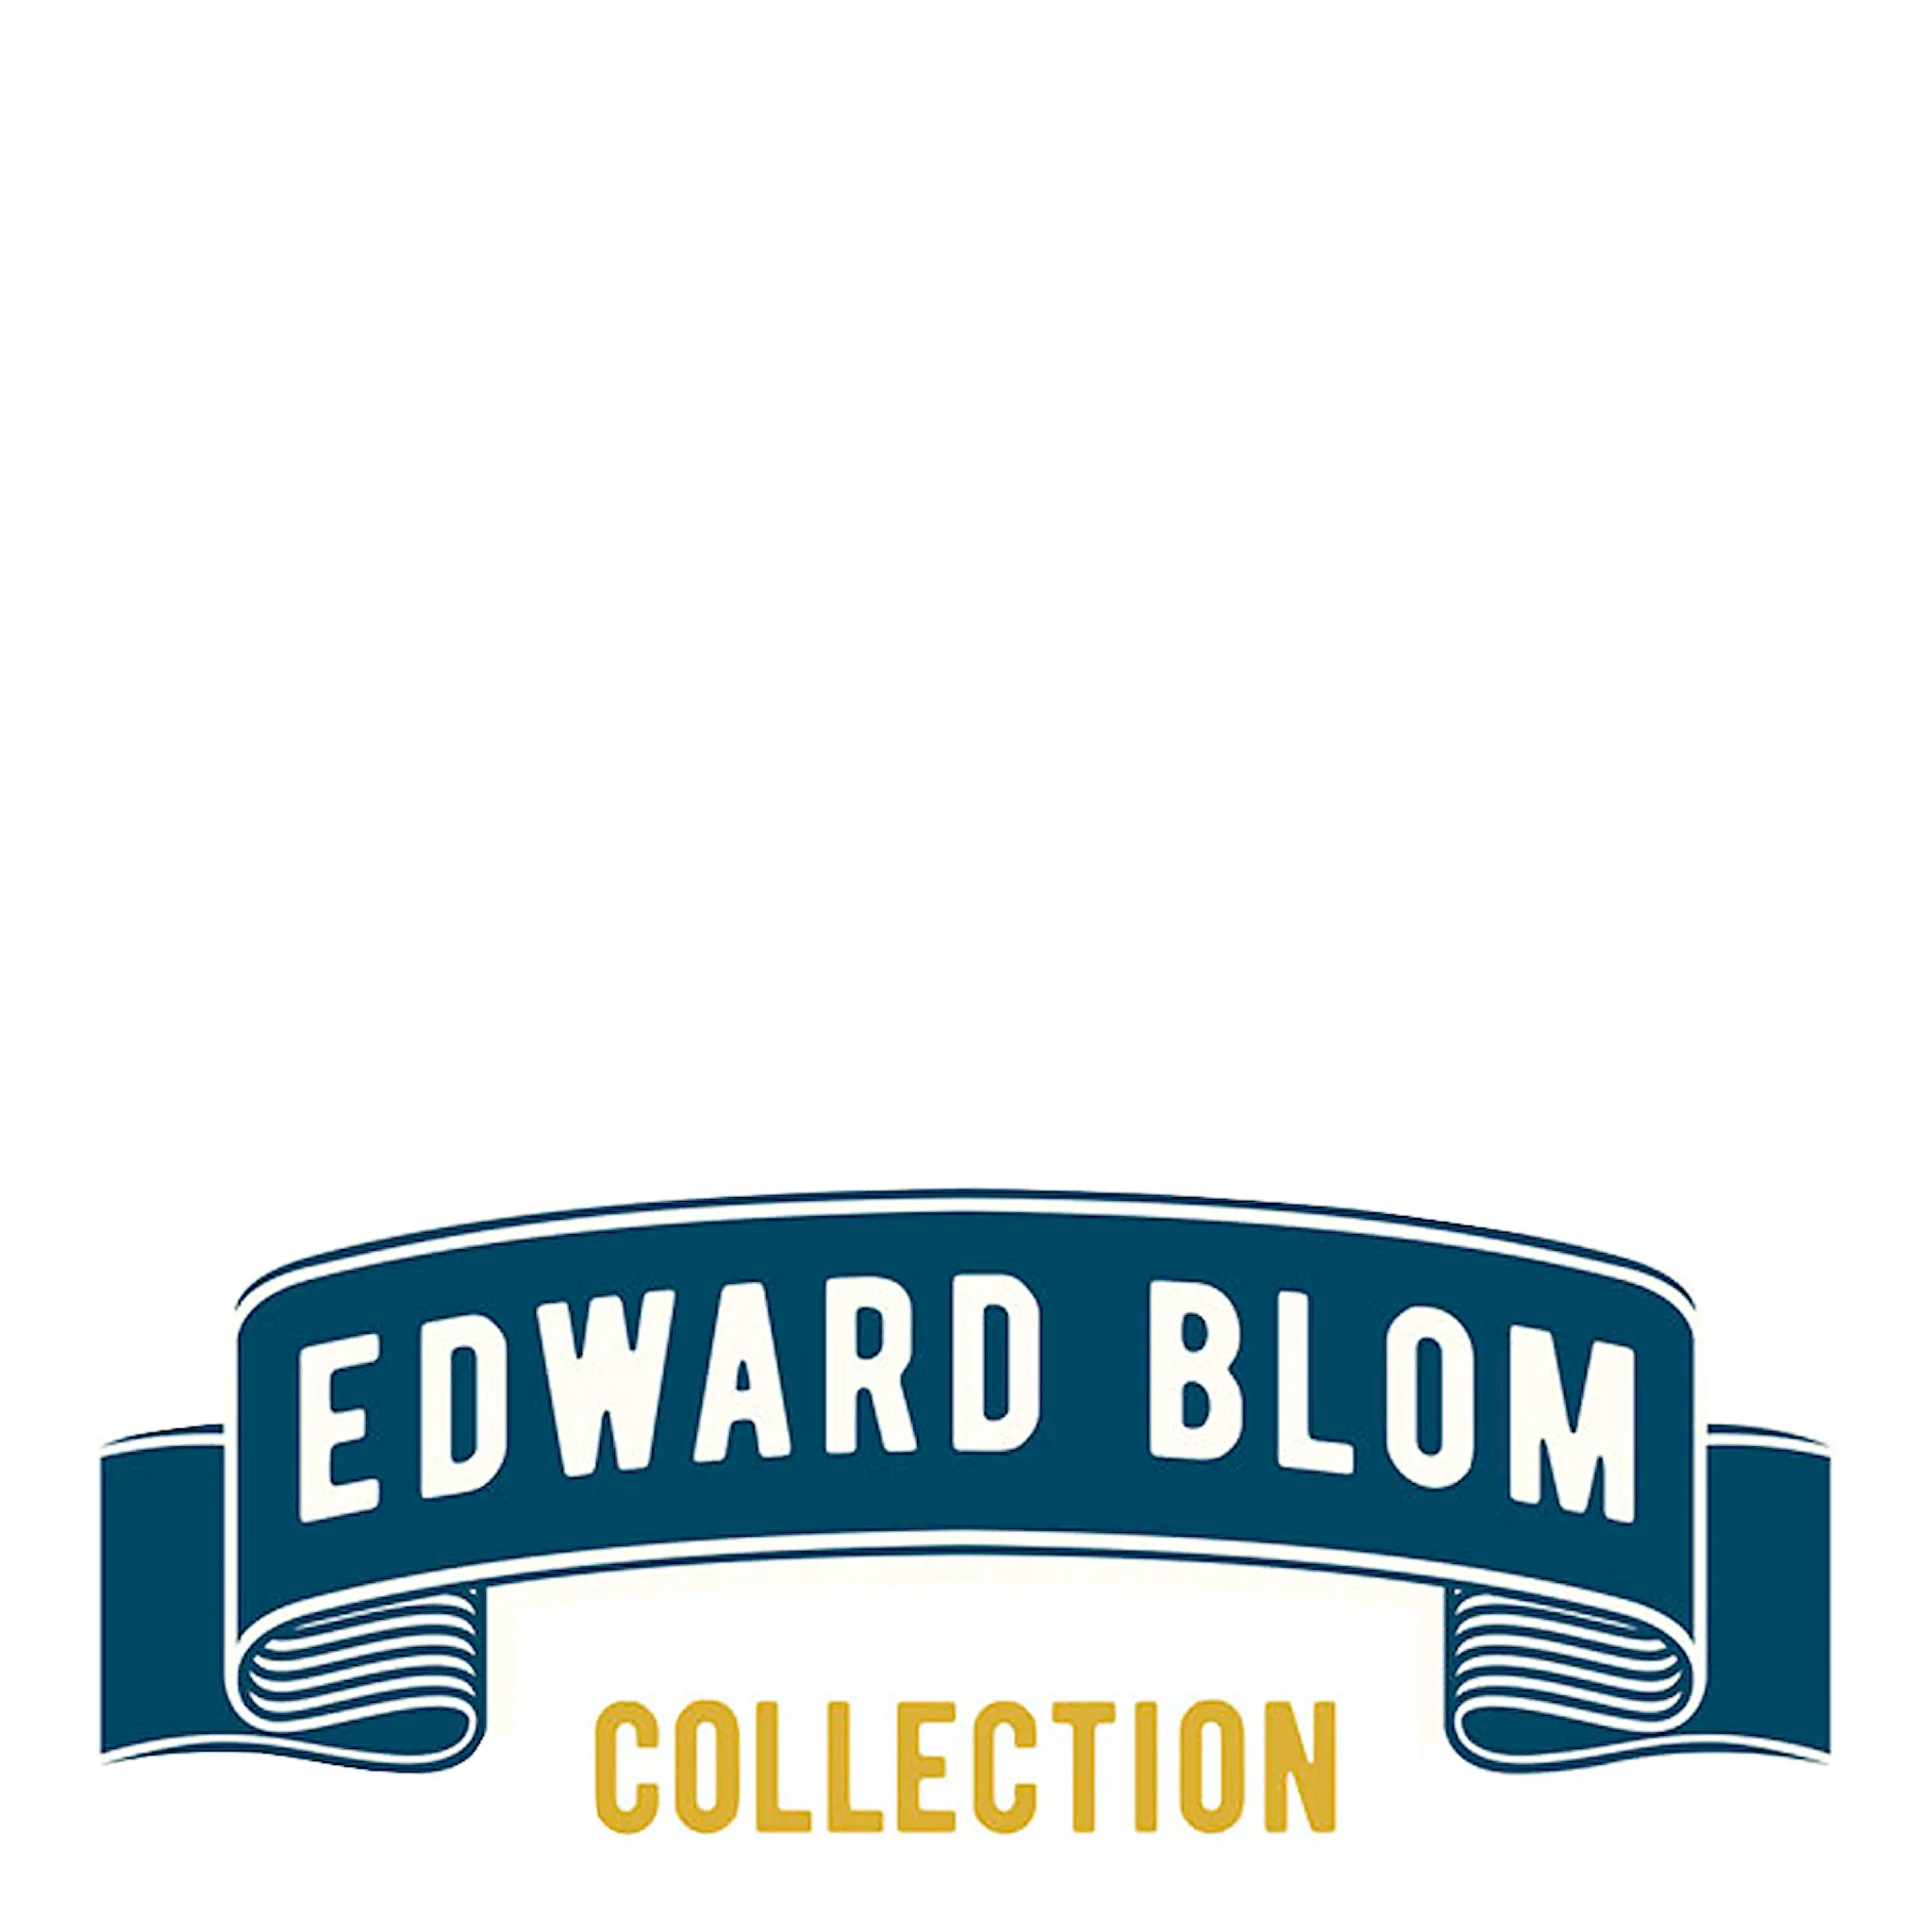 Edward Blom Collection Olutlasi Nro. 5